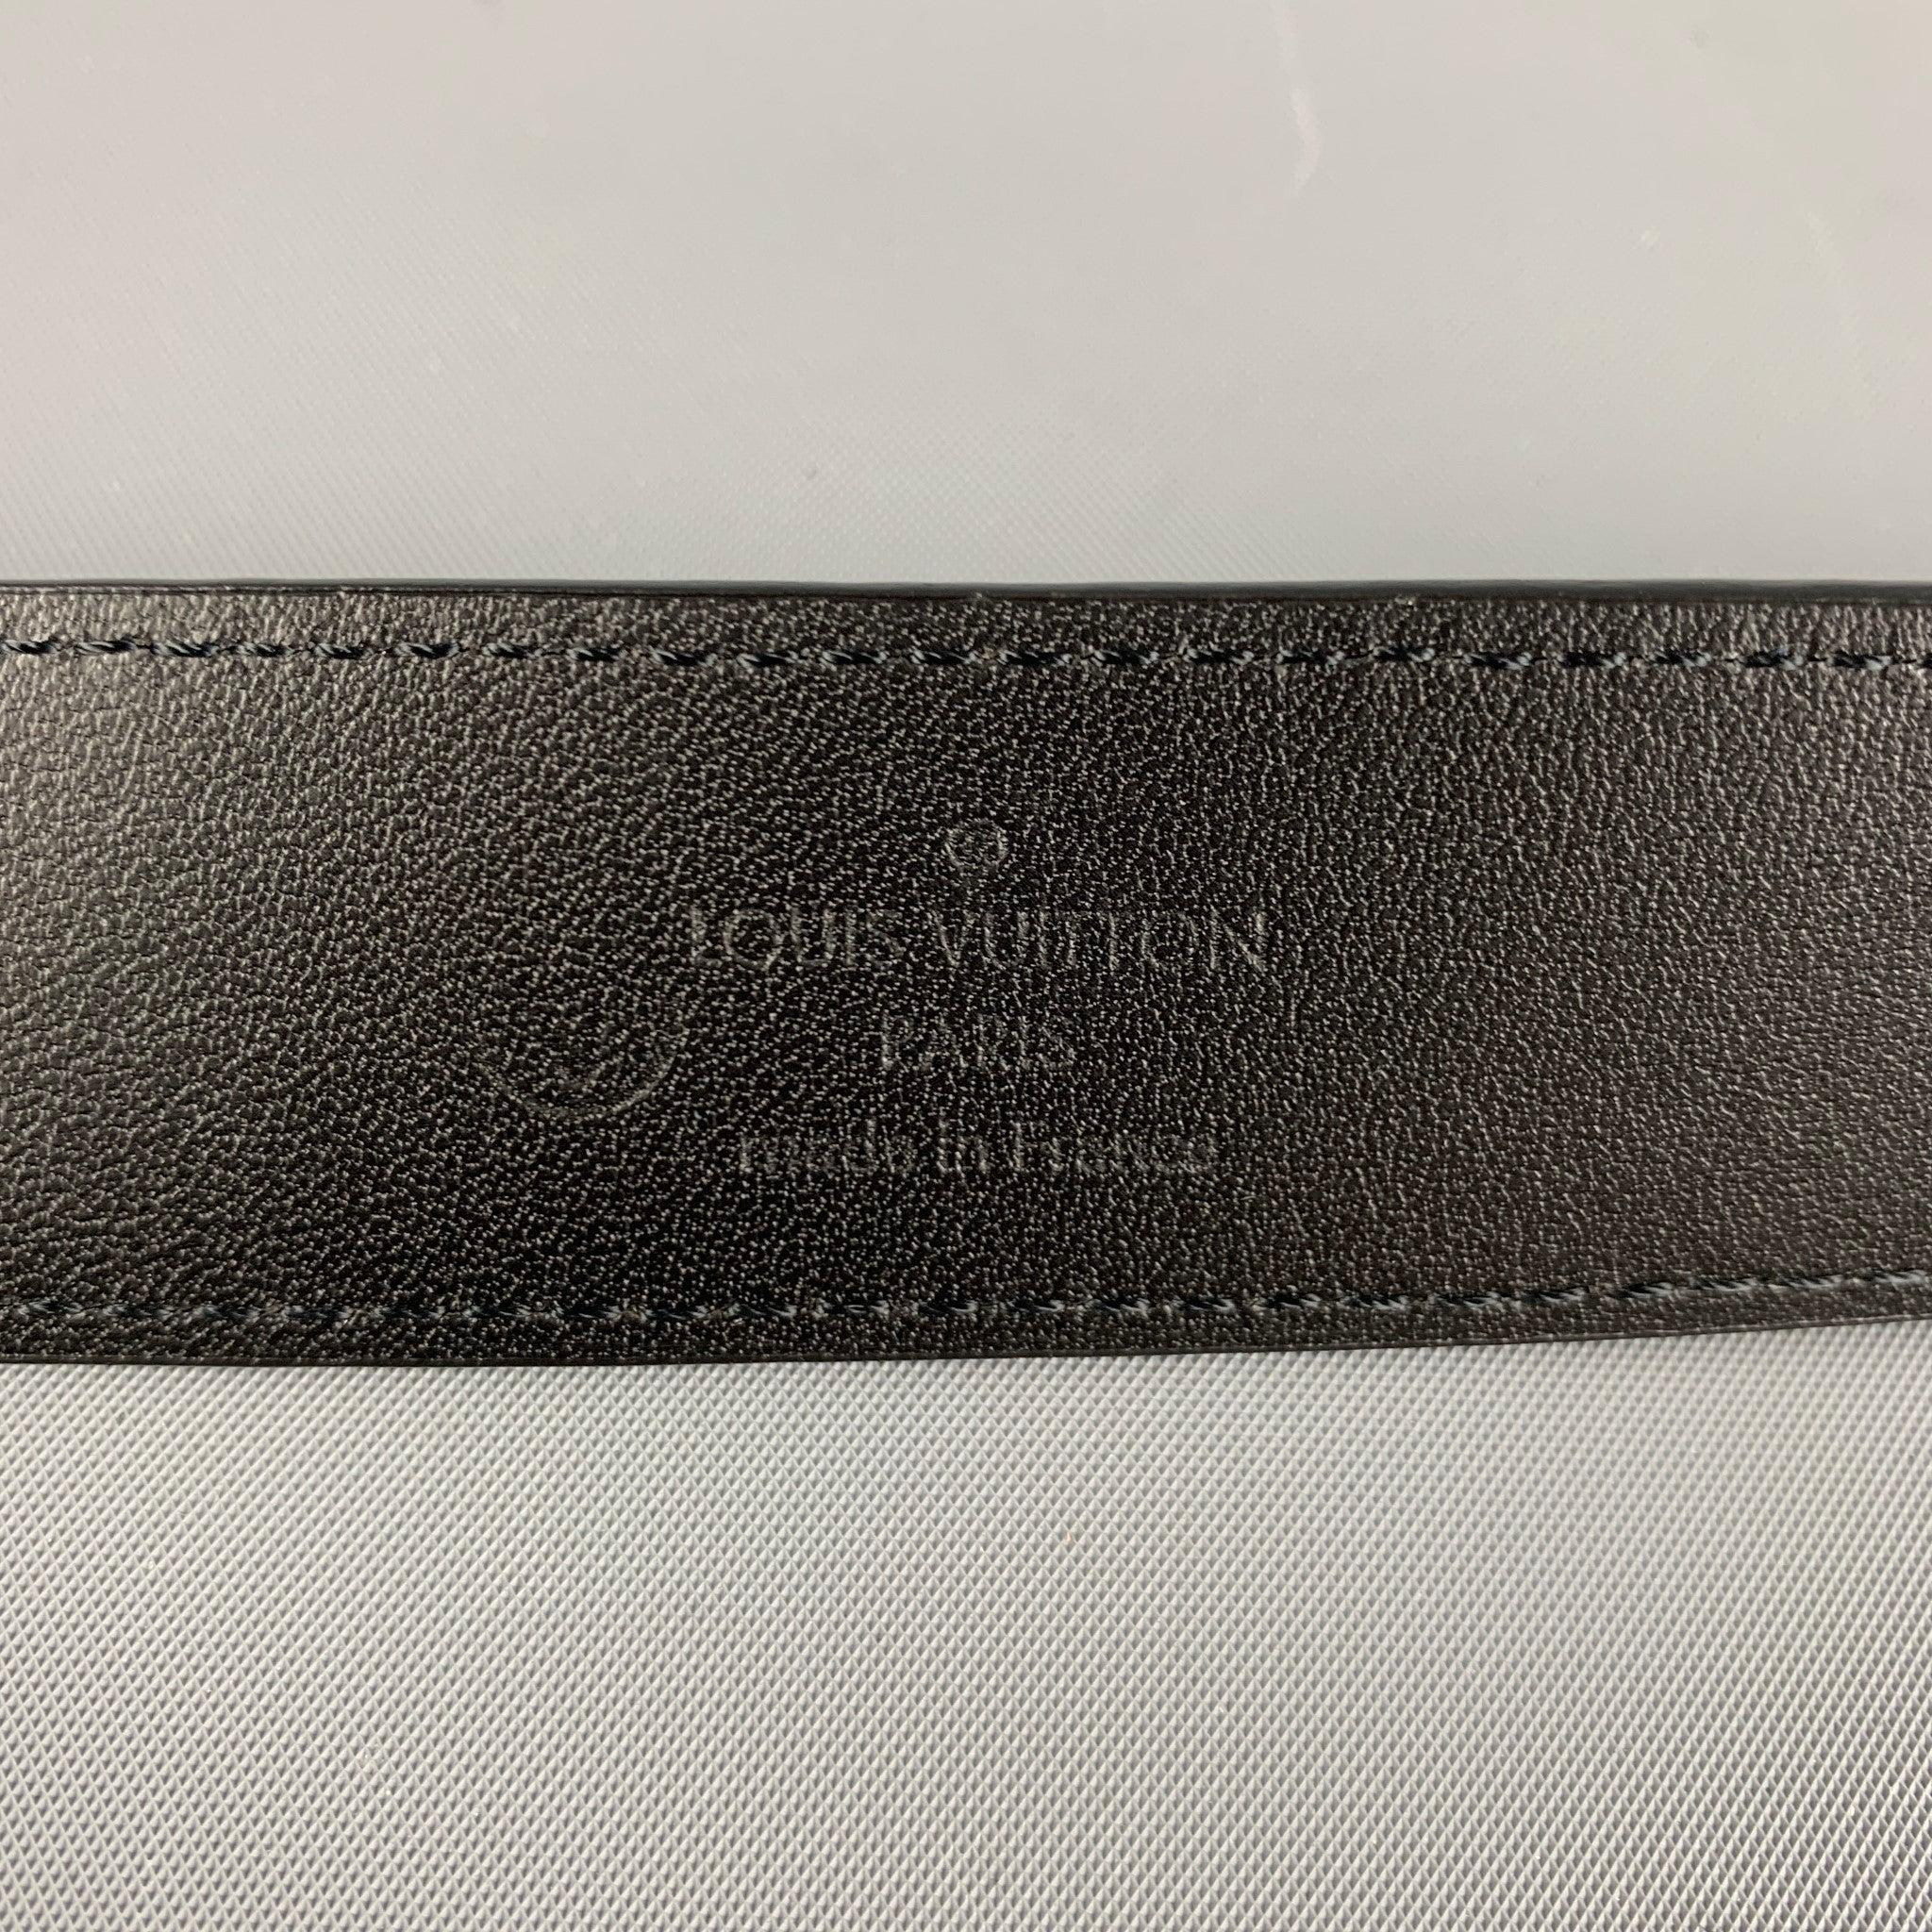 LOUIS VUITTON Waist Size 34 Black Textured Leather Belt For Sale 3